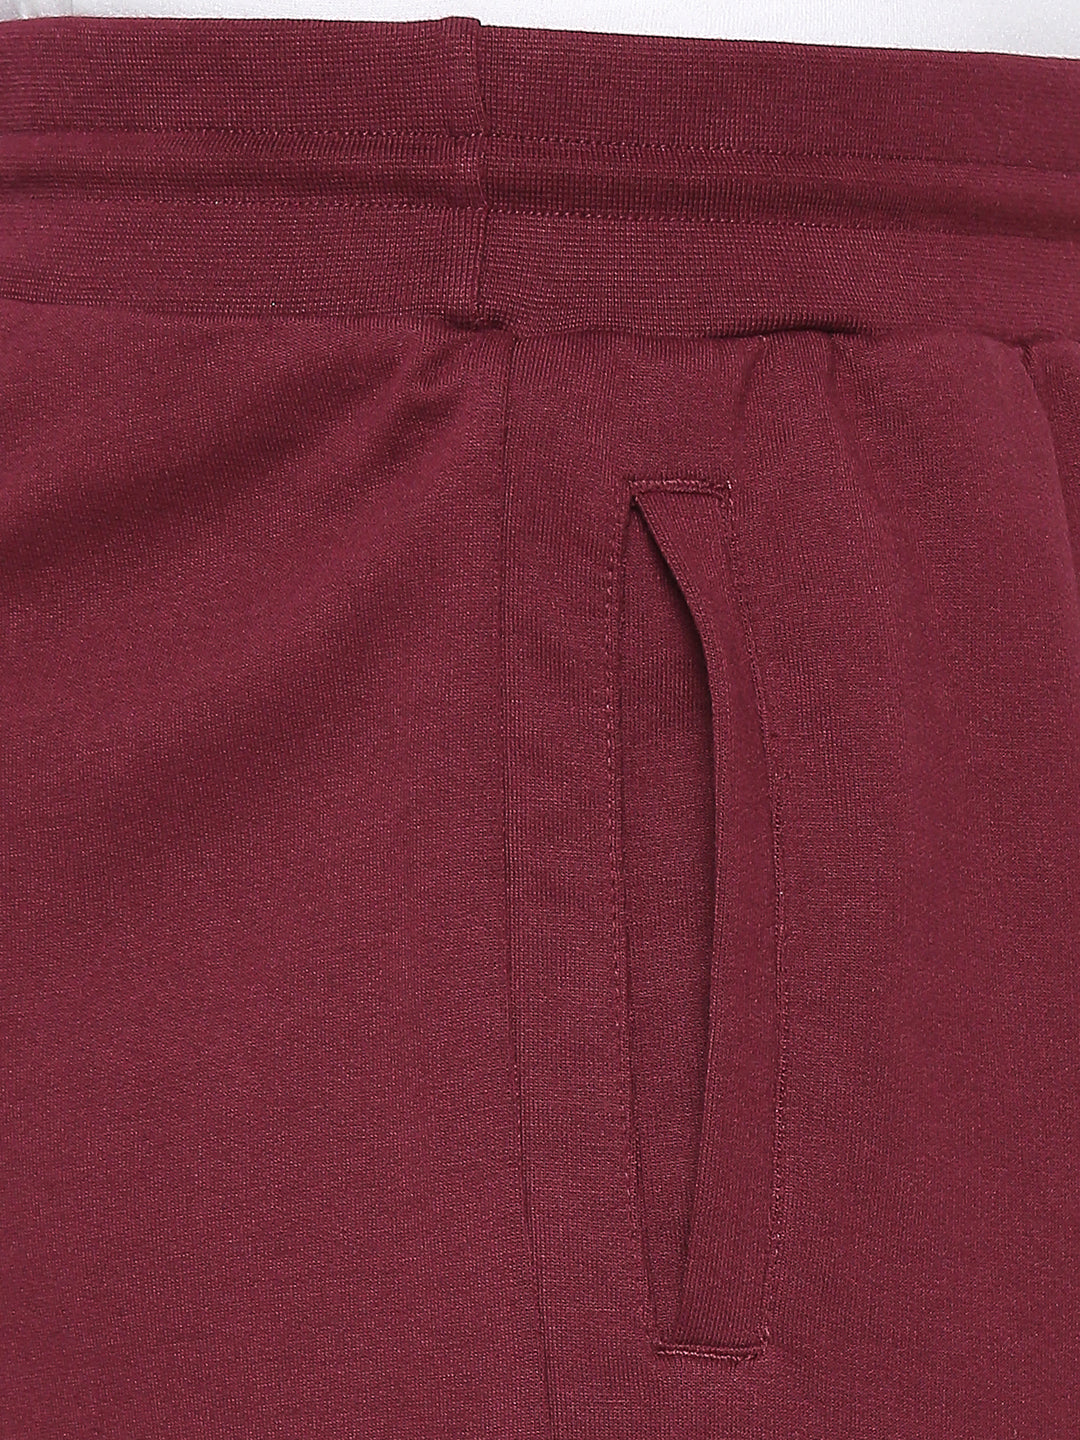 Men Wine Cotton Blend Shorts - Underjeans by Spykar